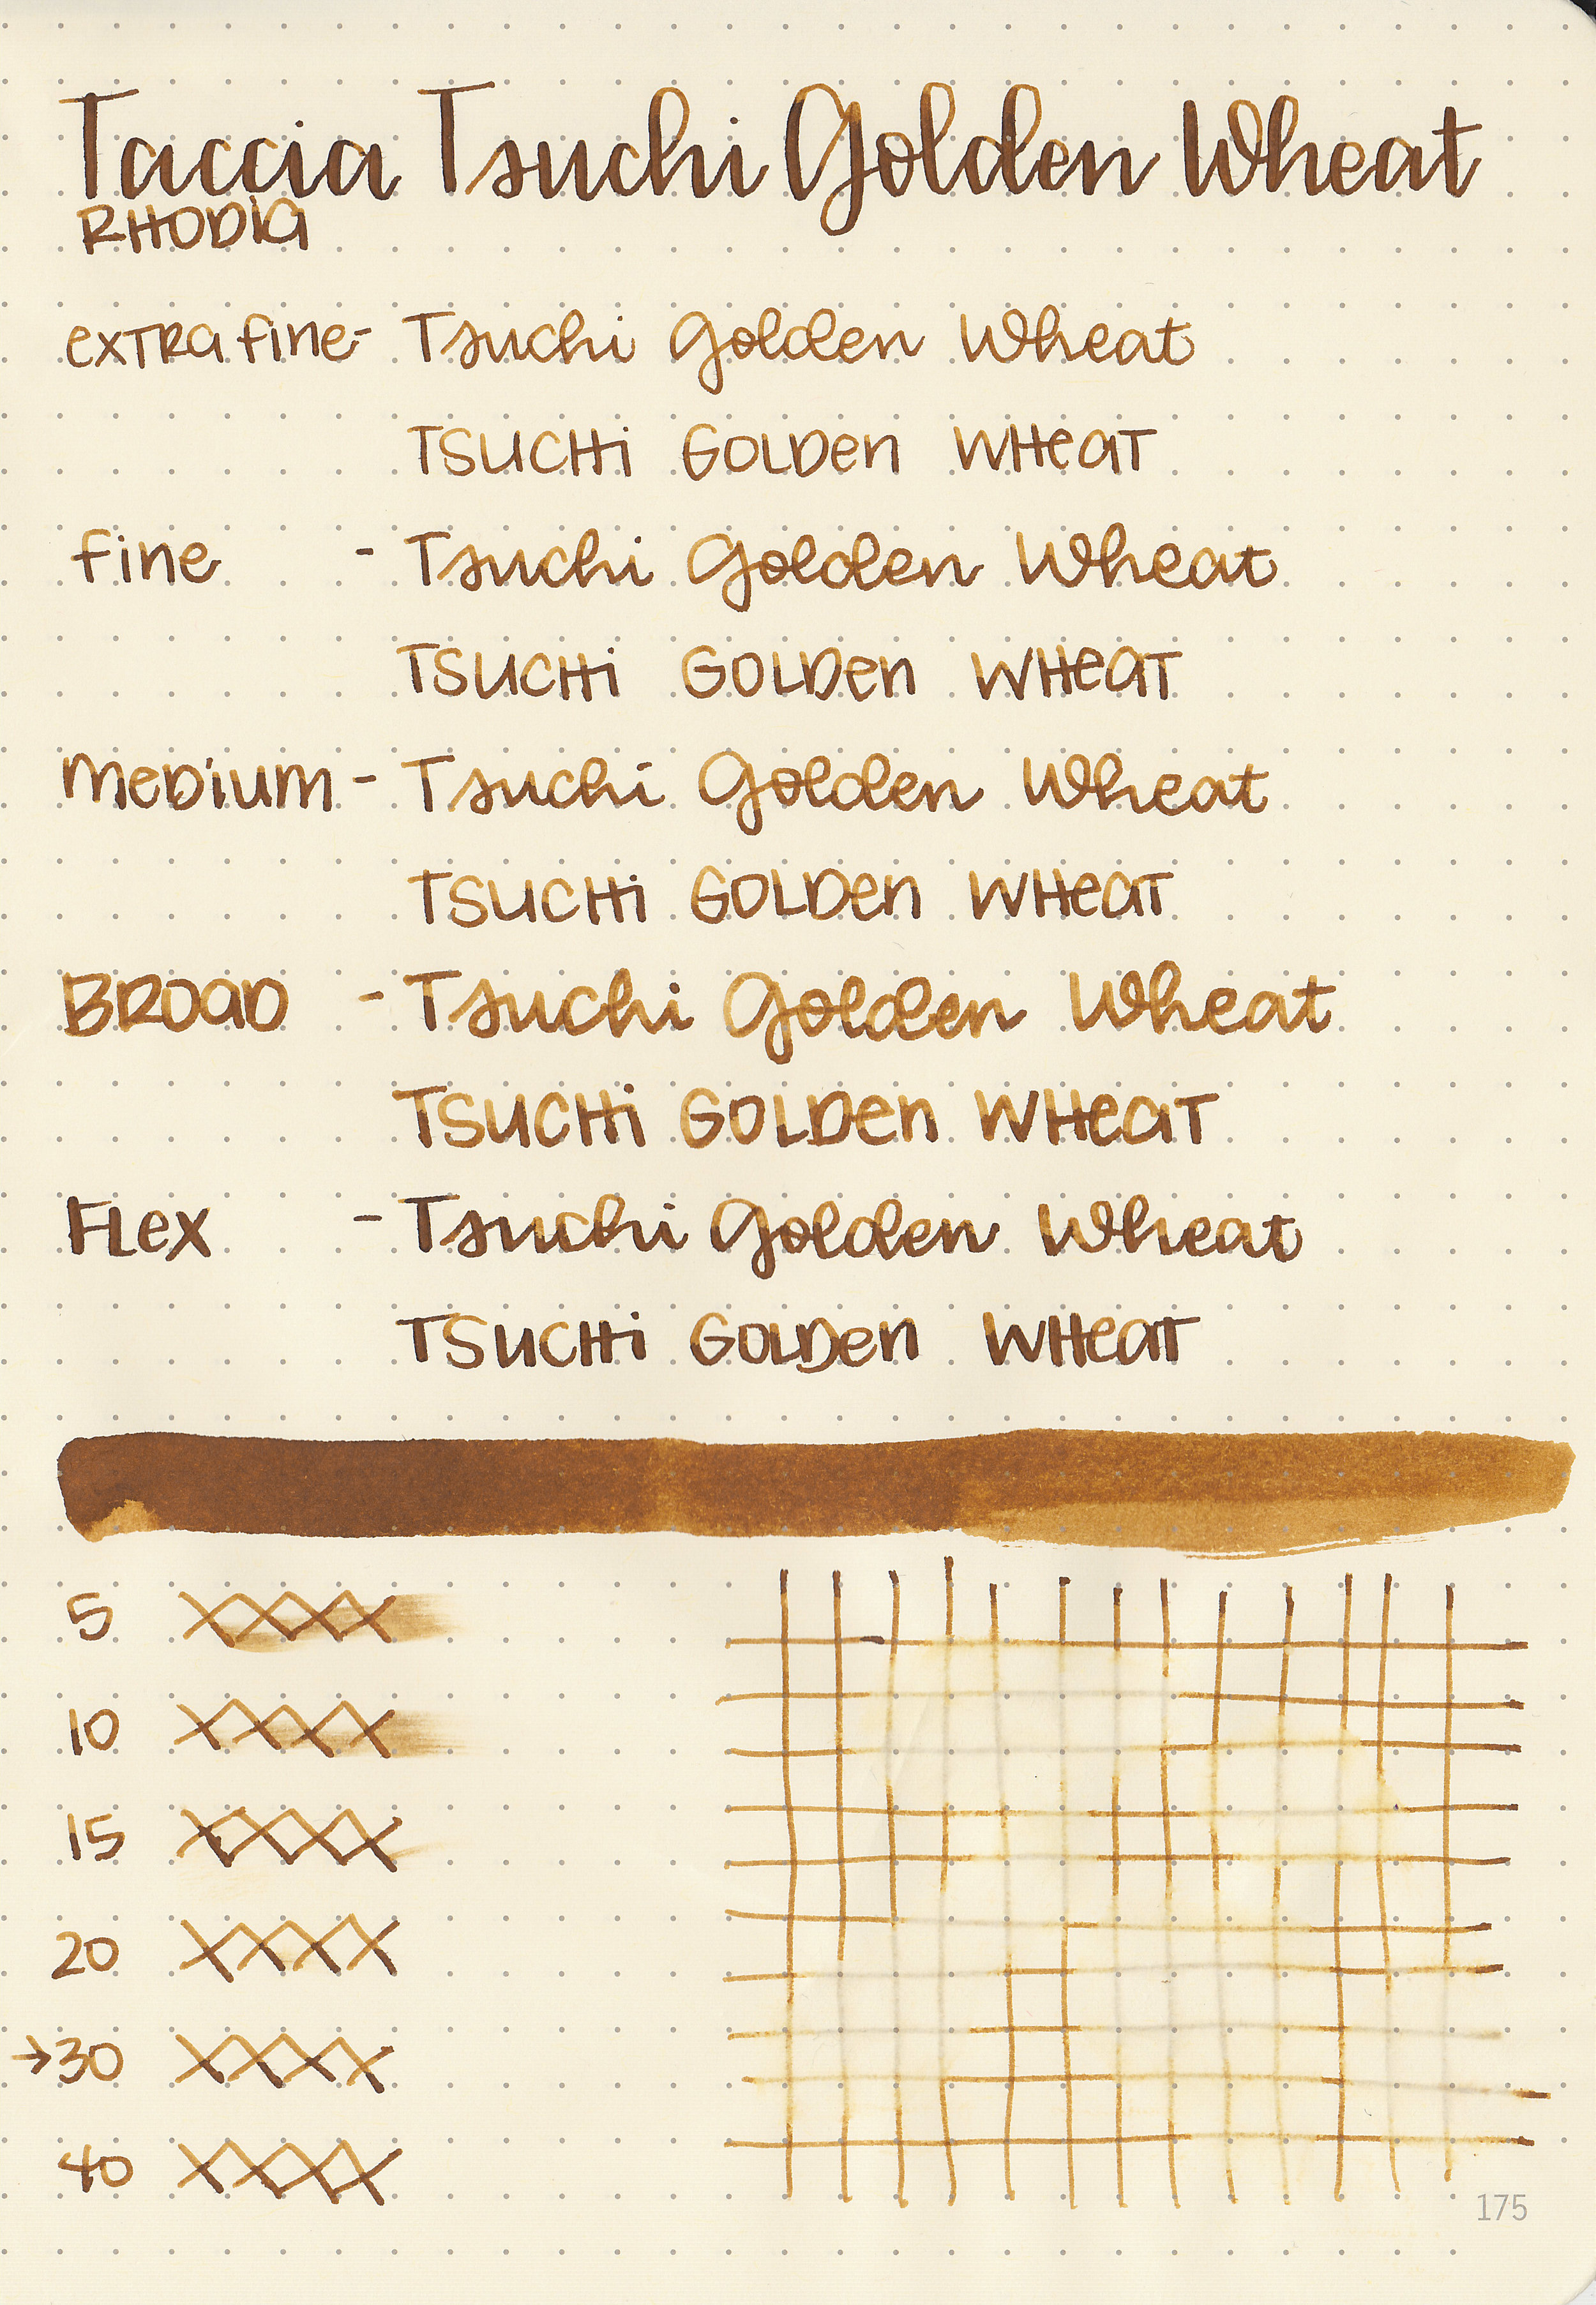 tac-tsuchi-golden-wheat-5.jpg